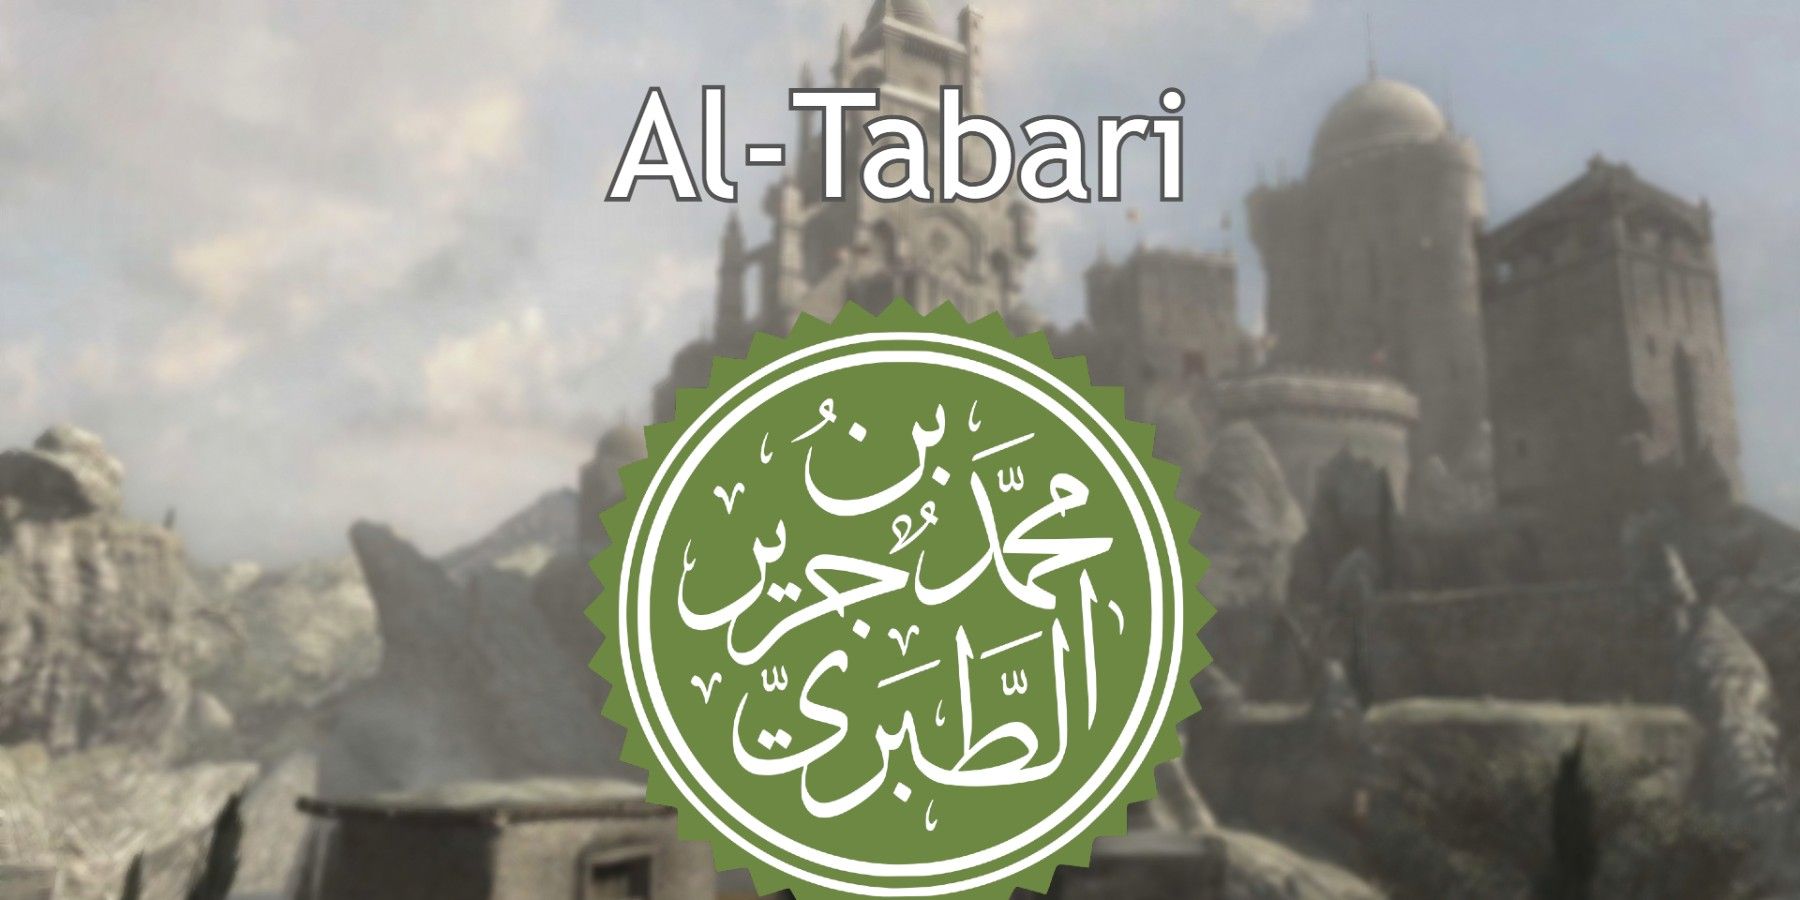 al tabari name and assassins creed